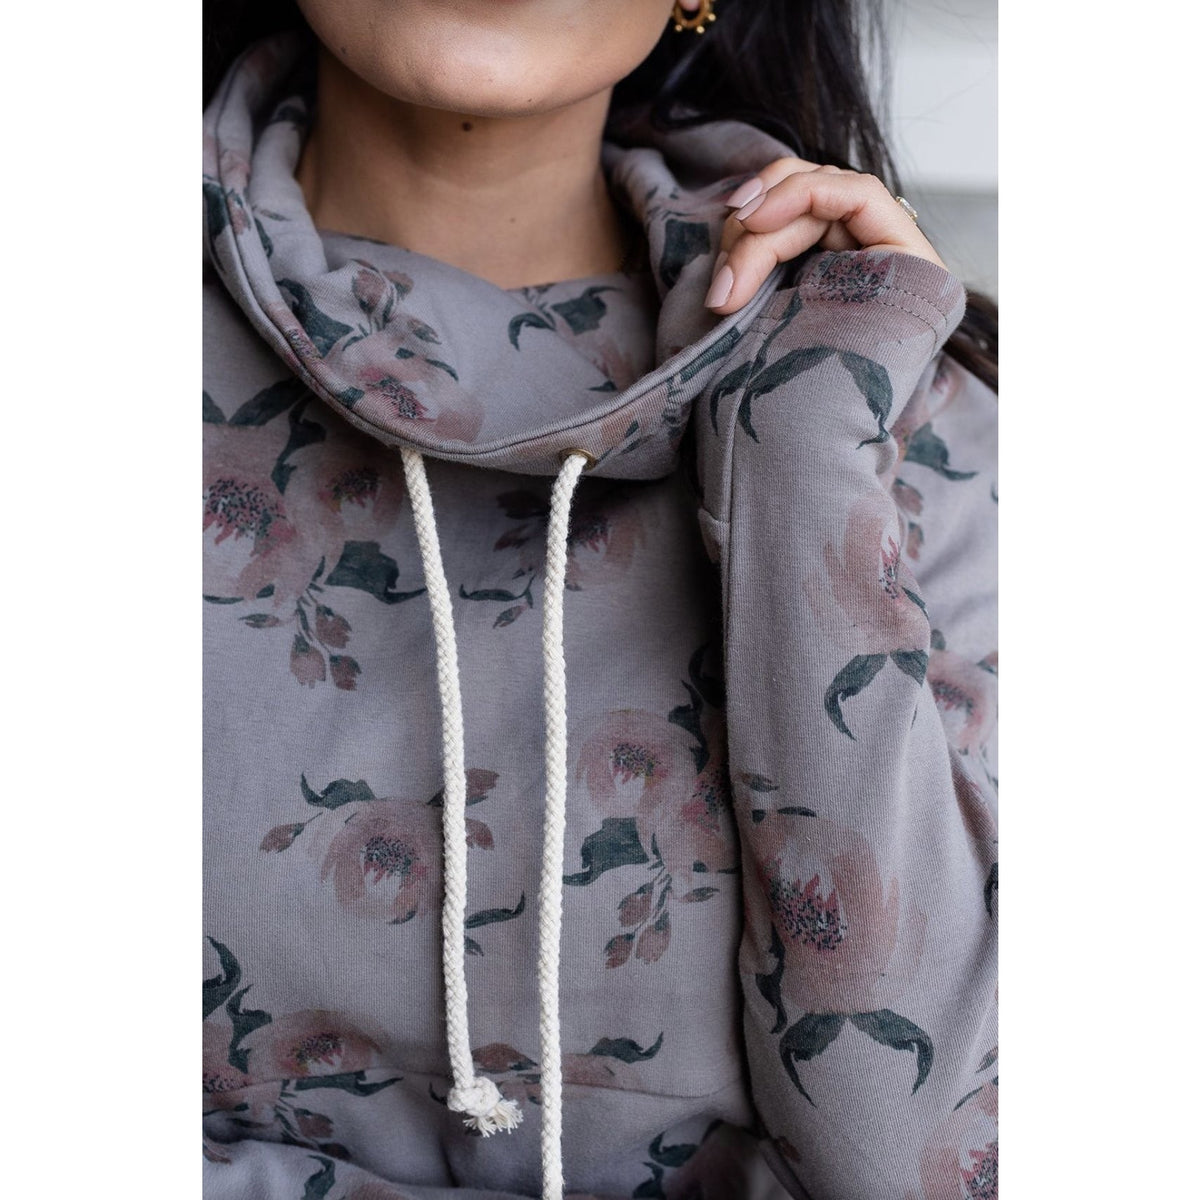 Ampersand Avenue Cowl Neck Sweatshirt Mademoiselle – The Boutique